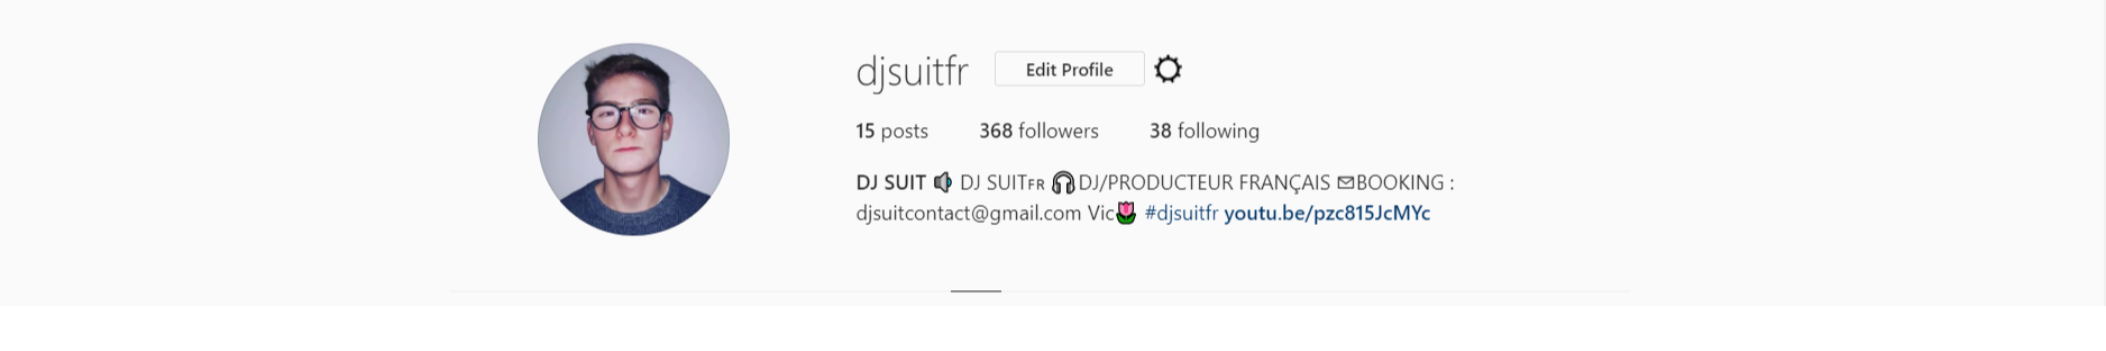 DJ SUIT